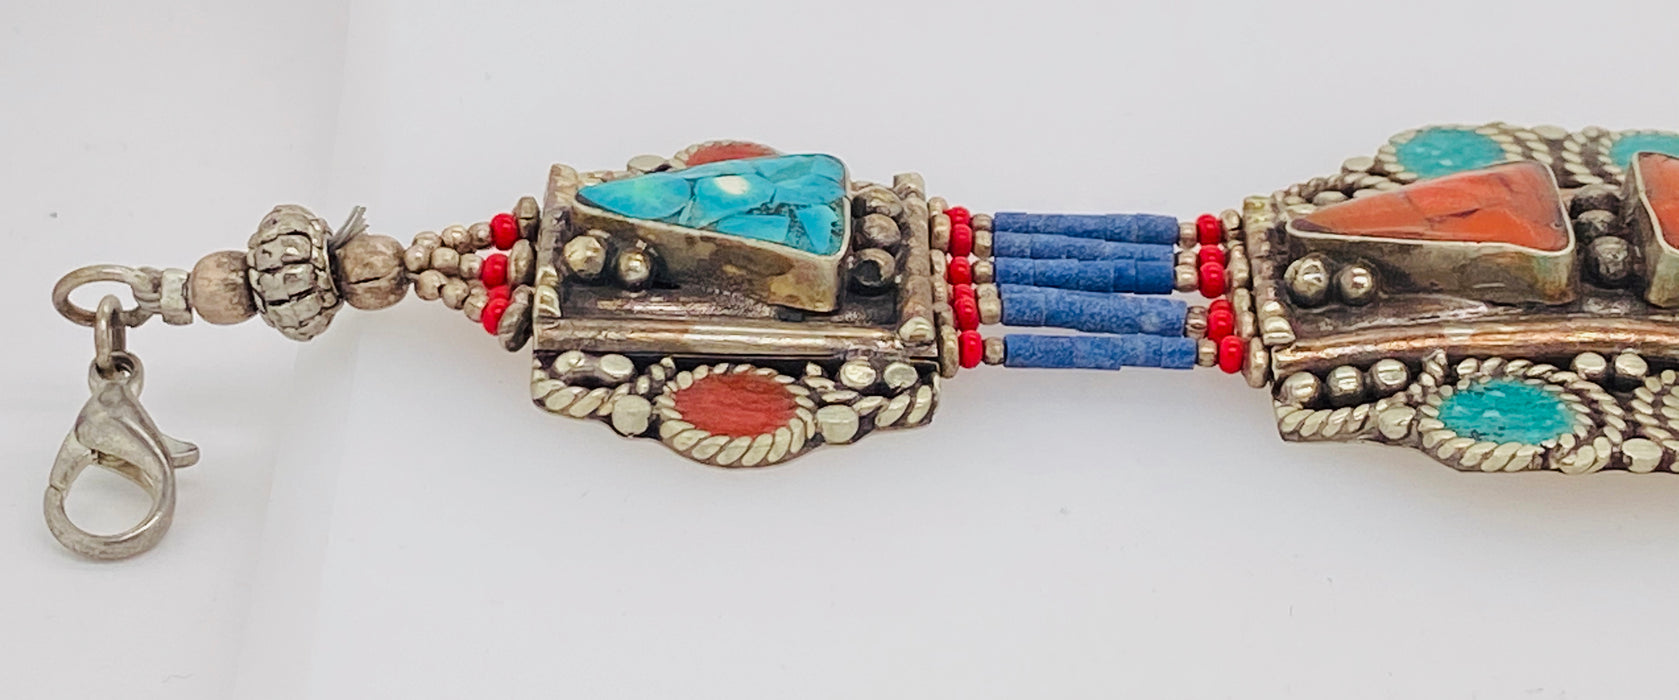 Moroccan Moorish Antique Silver Bracelet